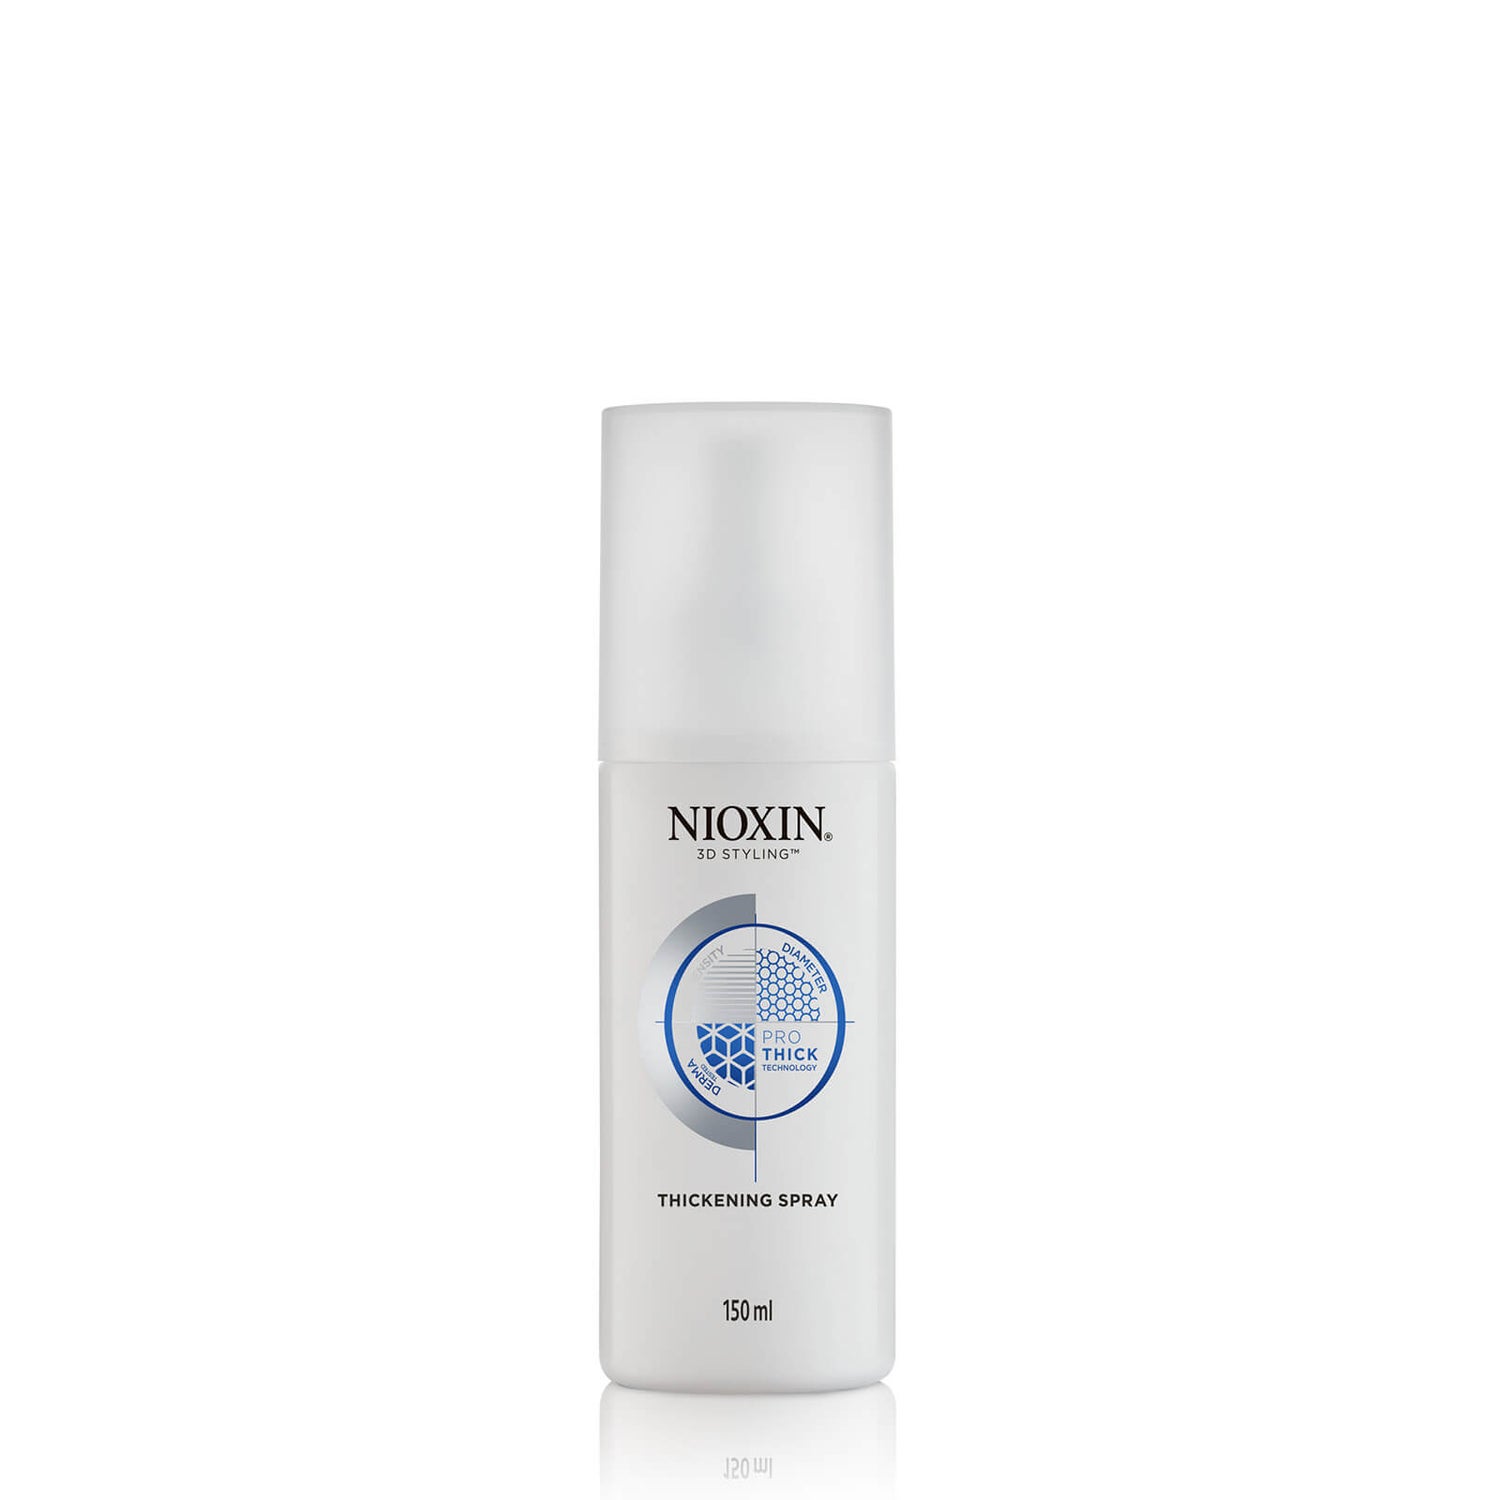 NIOXIN 3D Styling Thickening Hair Gel 140 ml